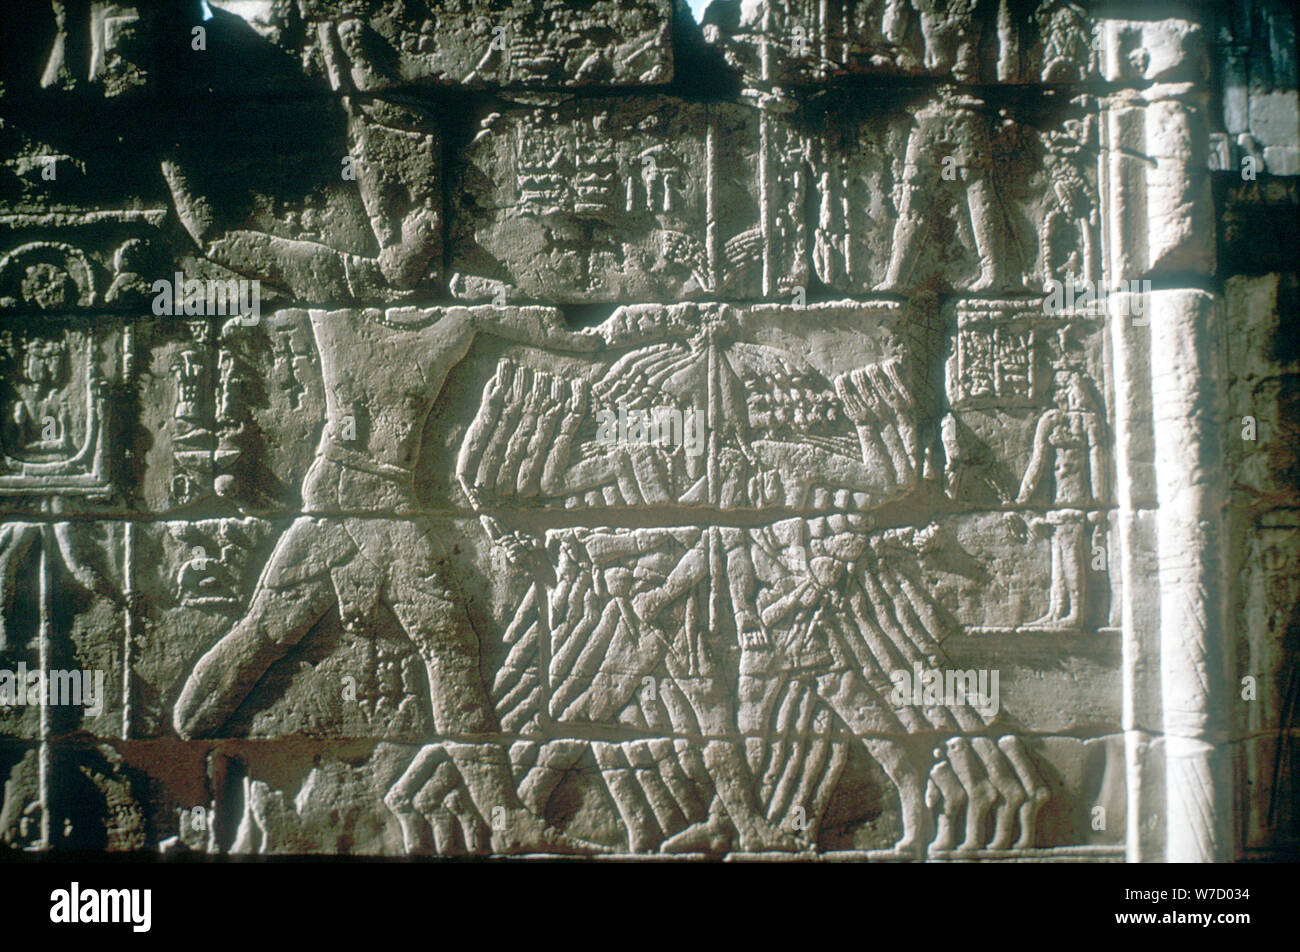 Rameses III smiting his enemies before Amun-Ra, Mortuary Temple, Medinat Habu, Egypt, c12th cen BC Artist: Unknown Stock Photo